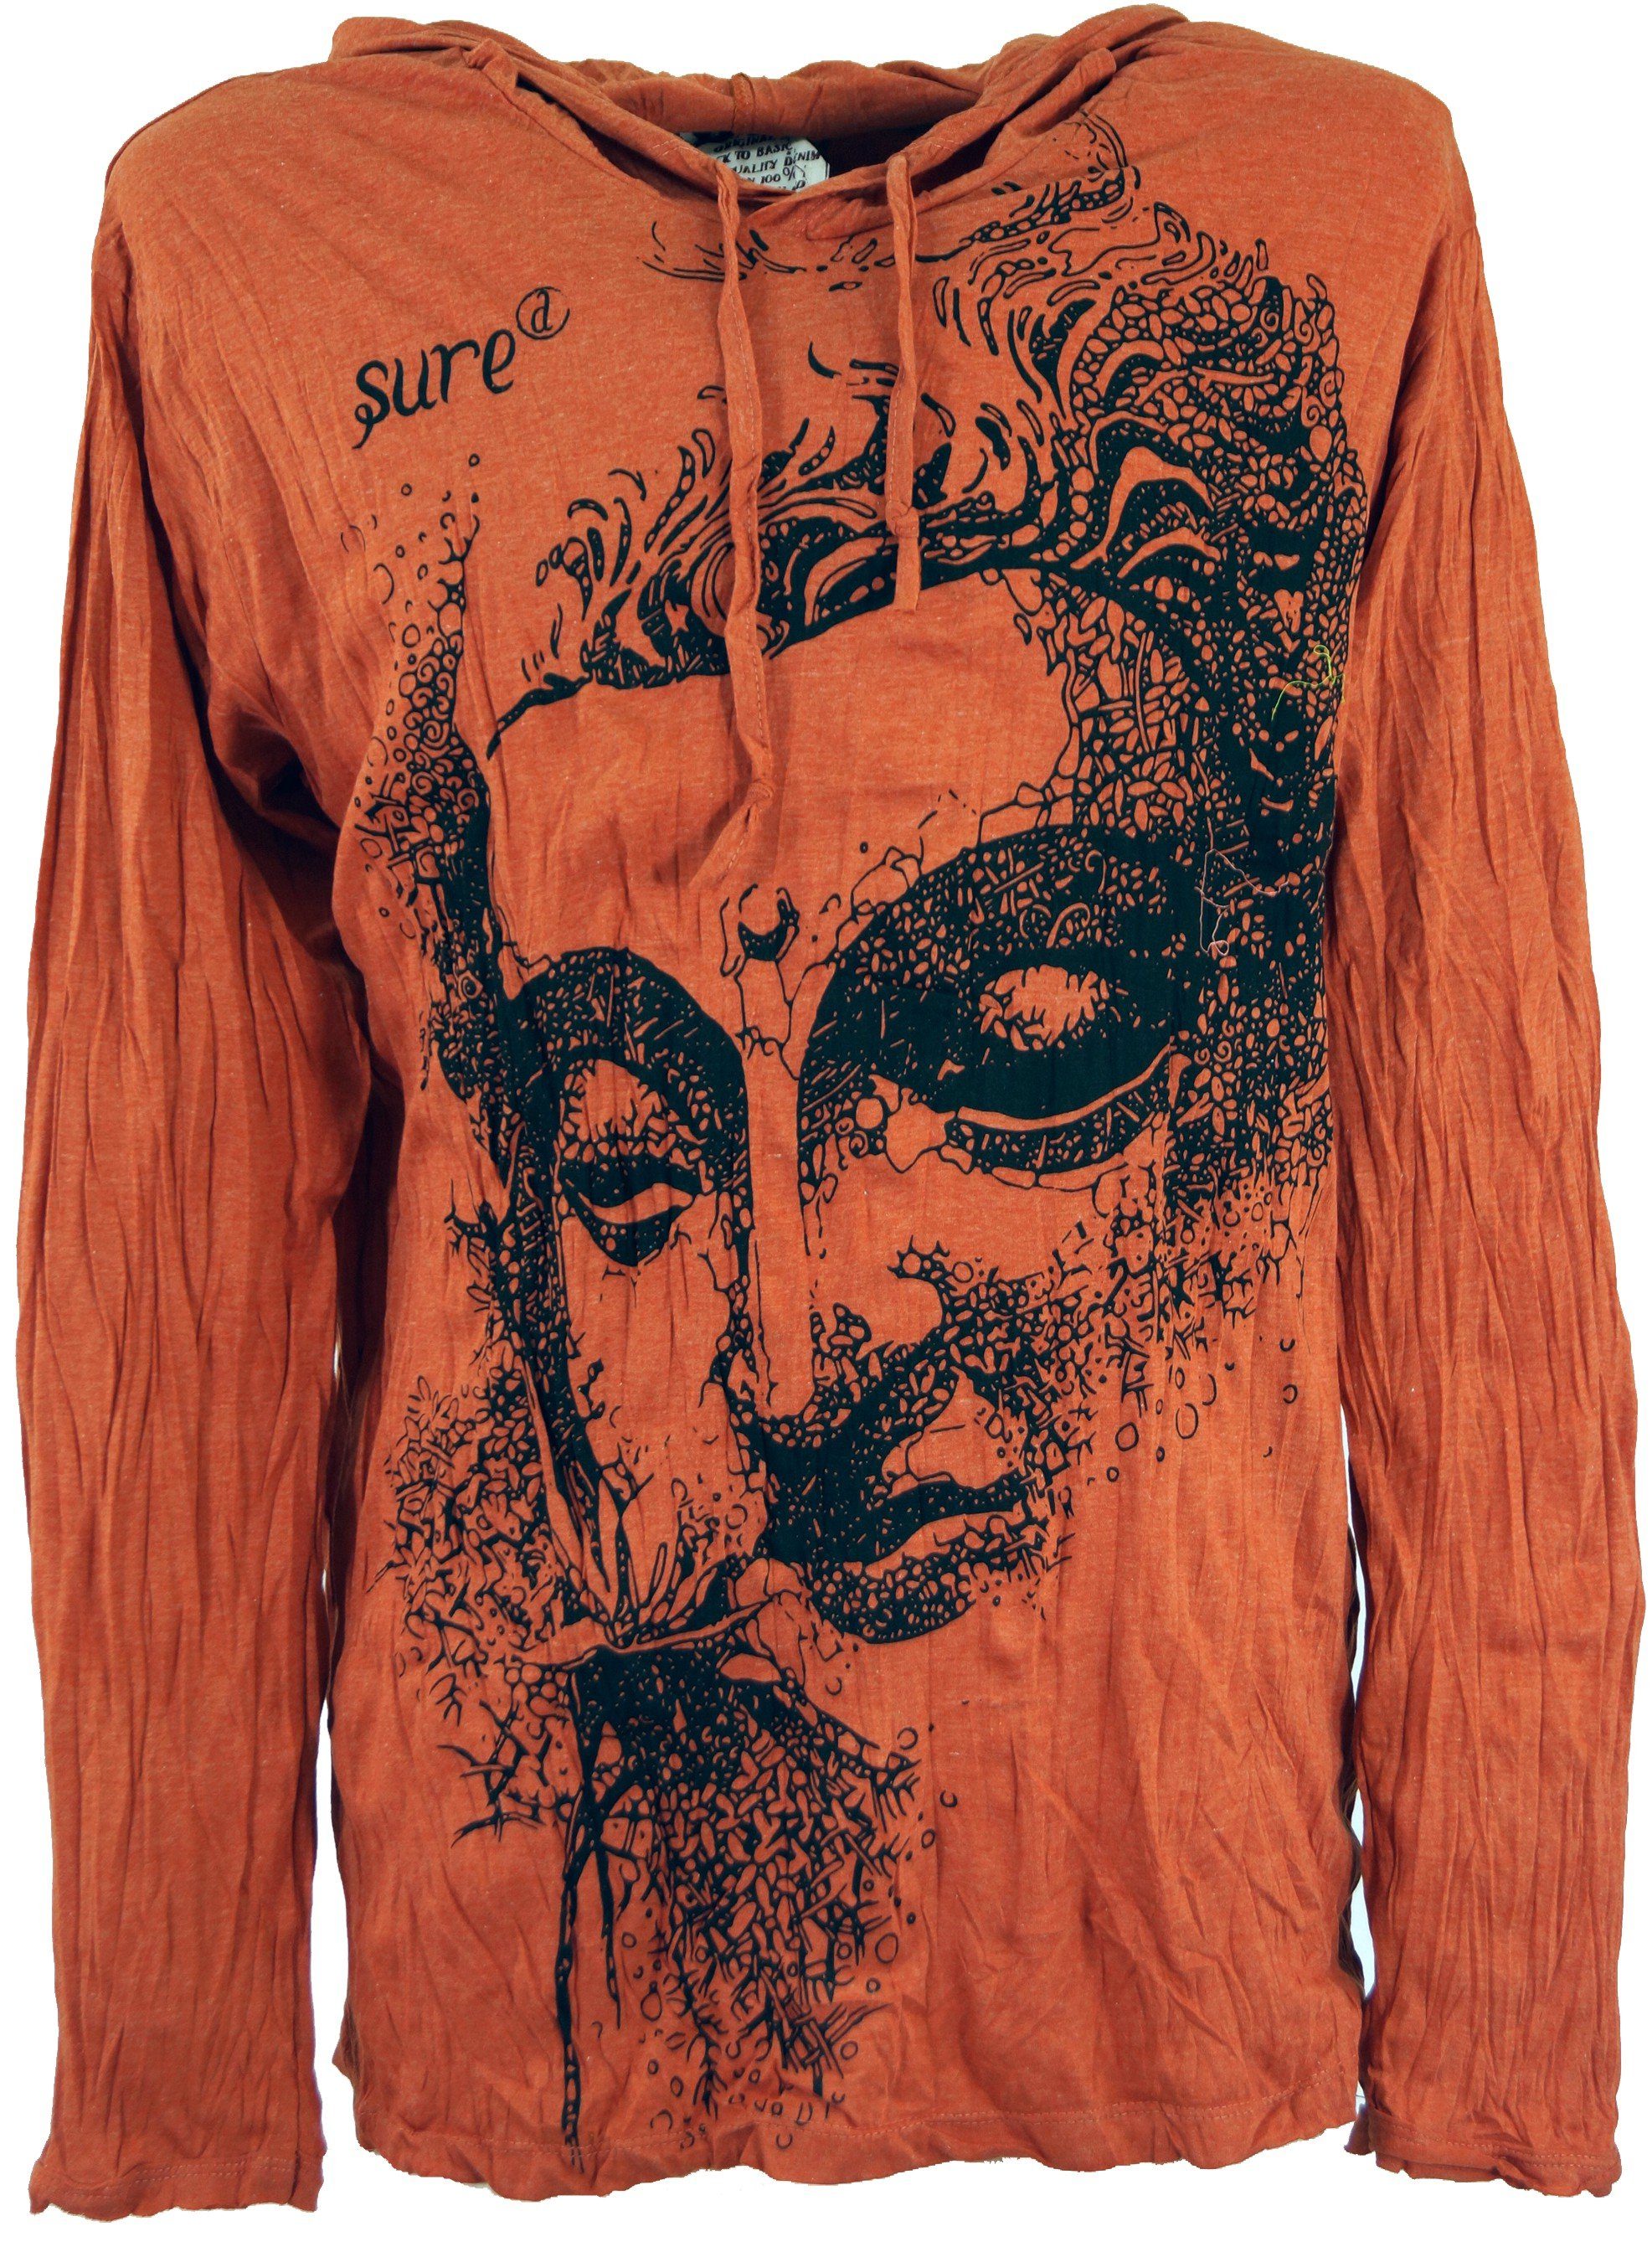 Guru-Shop T-Shirt Sure Langarmshirt, Kapuzenshirt Dreaming Buddha.. Goa Style, Festival, alternative Bekleidung rostorange